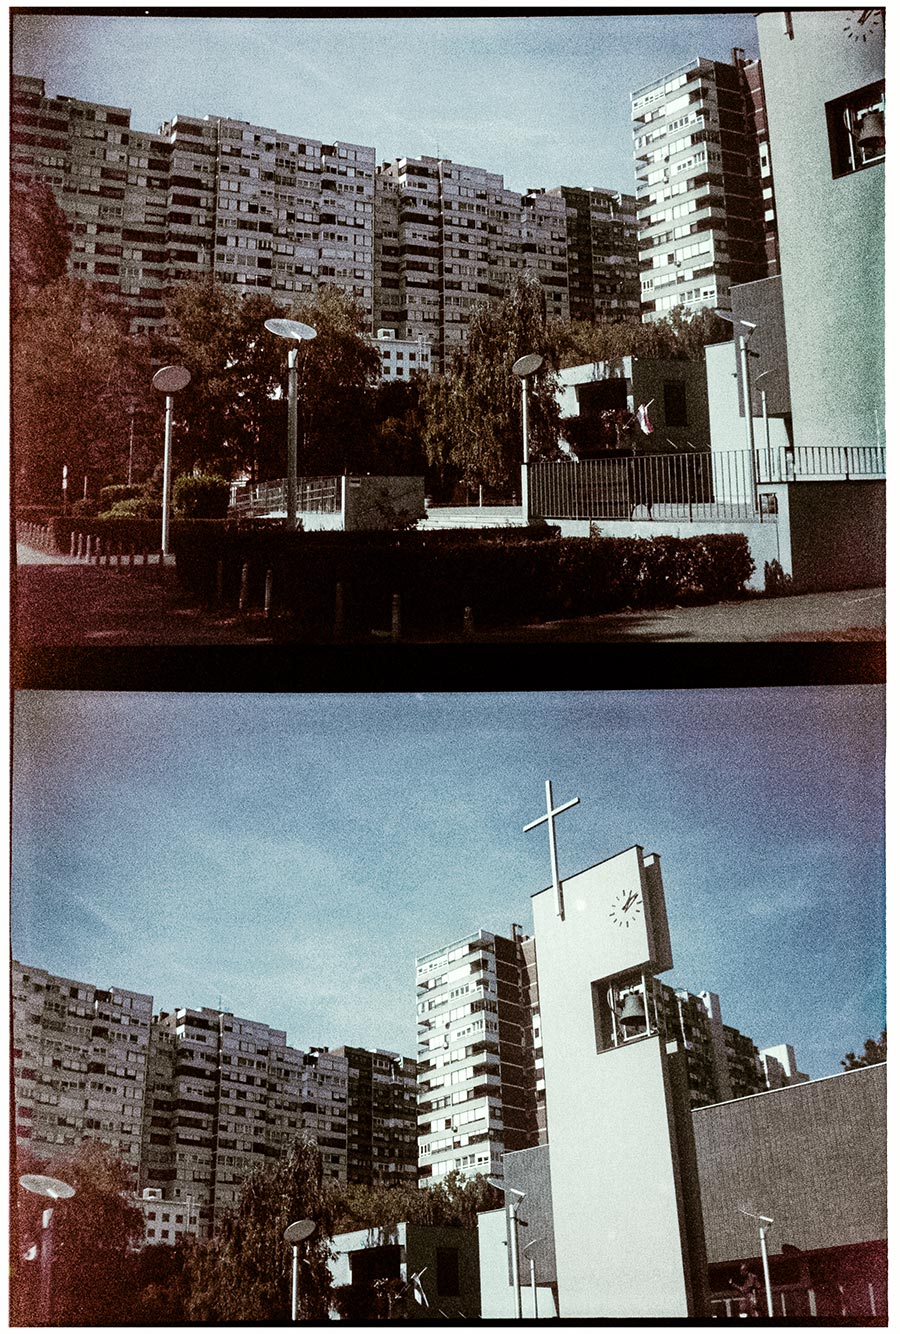 zagreb-brutalismus-mamutica9-analogefotografie-antjekroeger